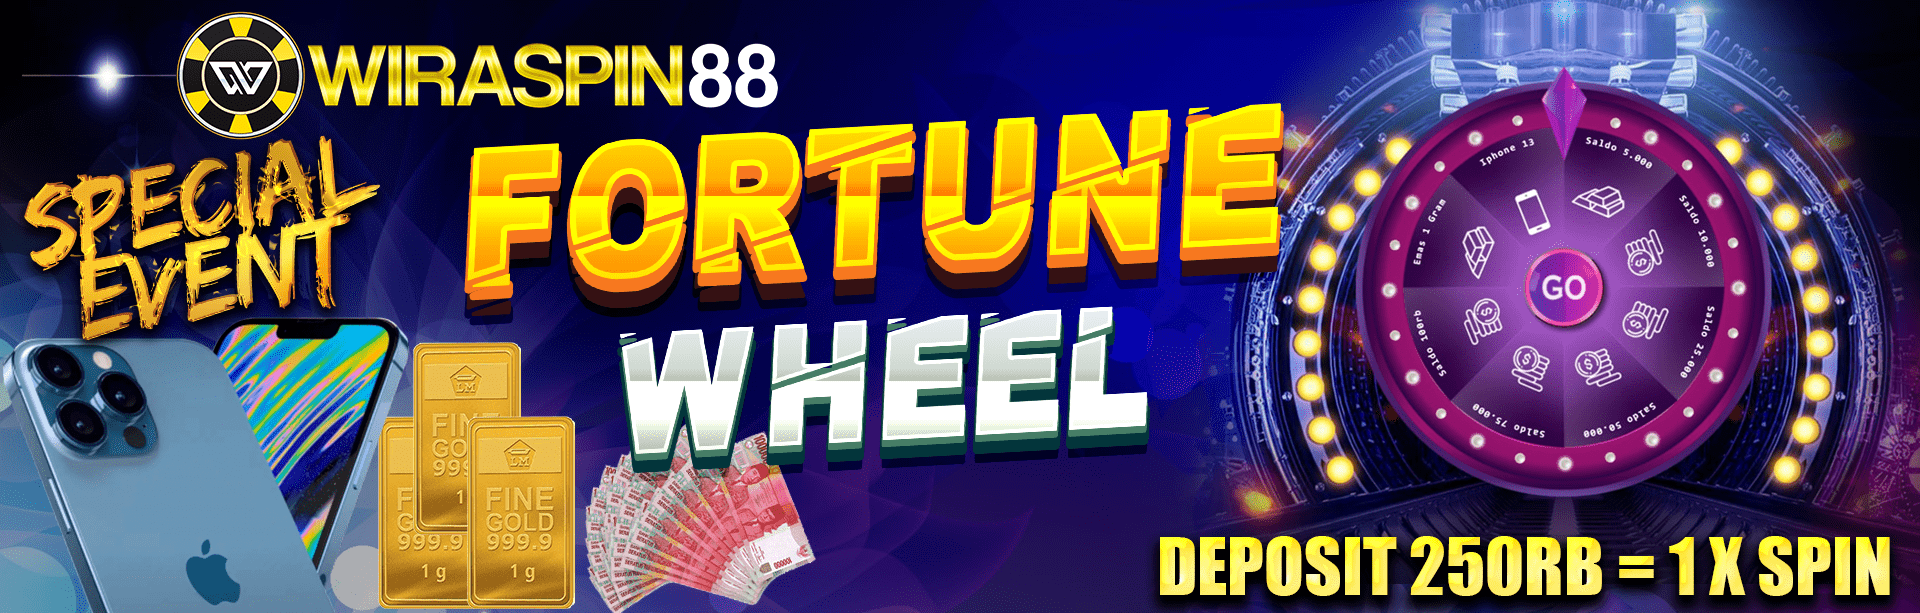 Event Fortune Wheel